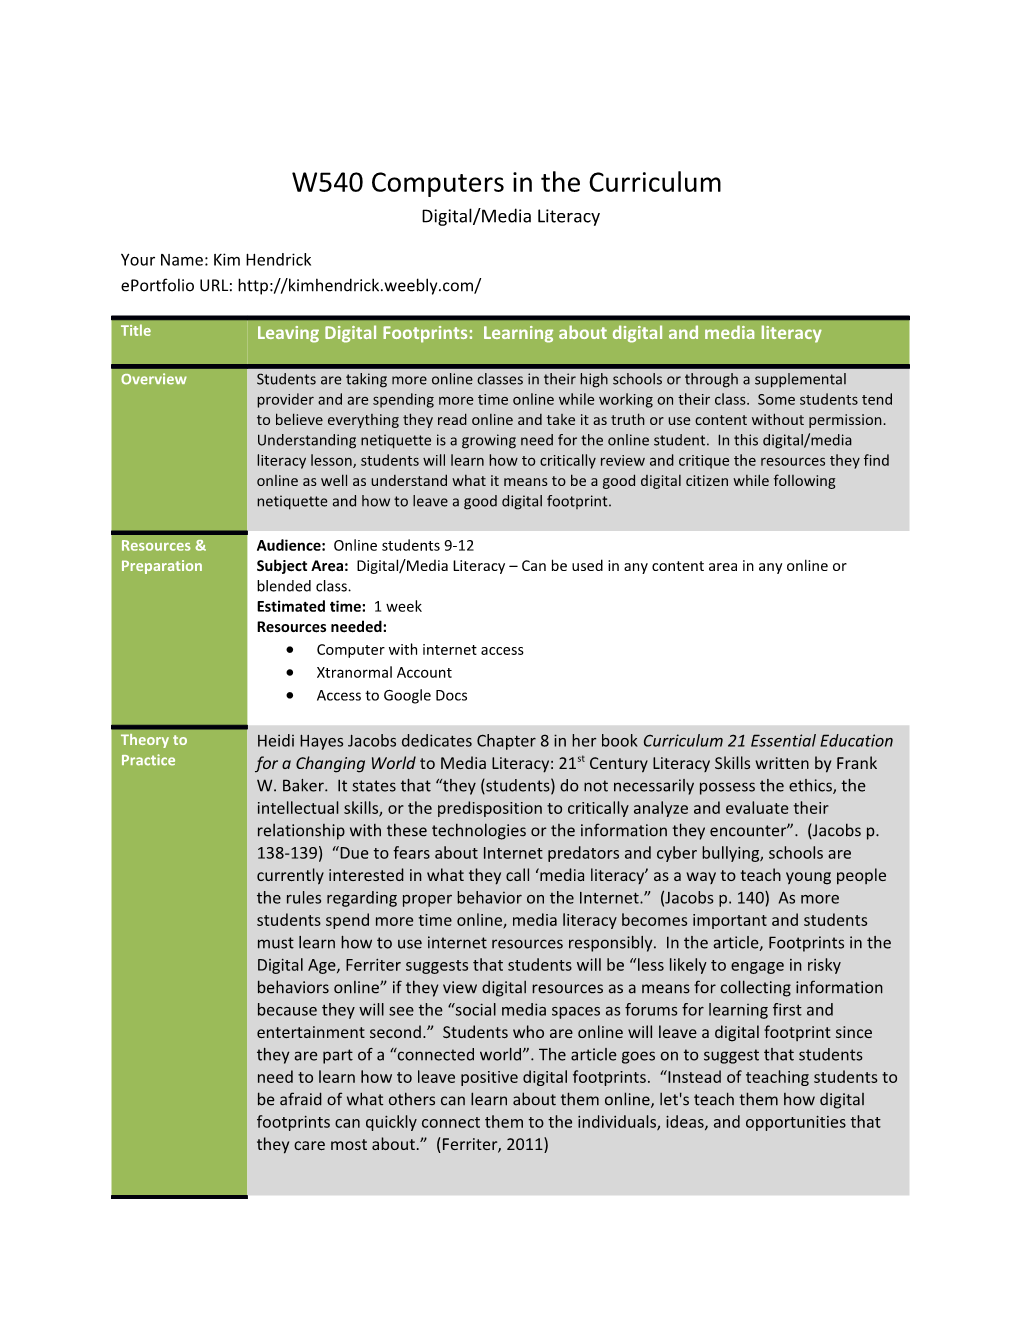 W540 Computers in the Curriculum Digital/Media Literacy